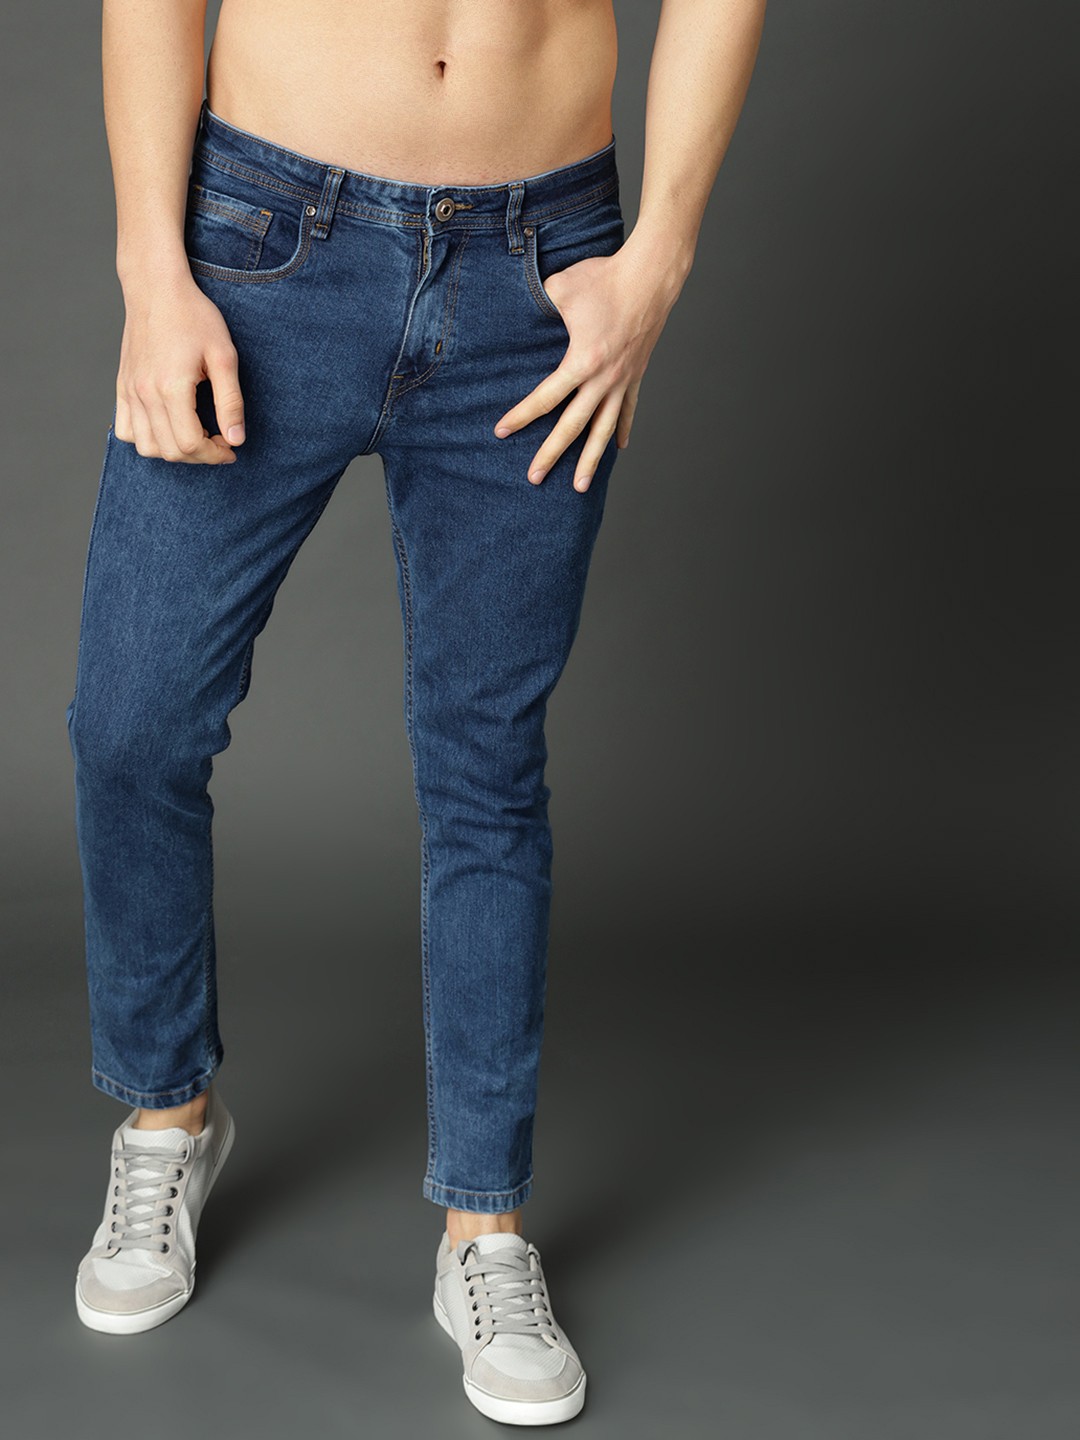 roadster skinny fit men's jeans